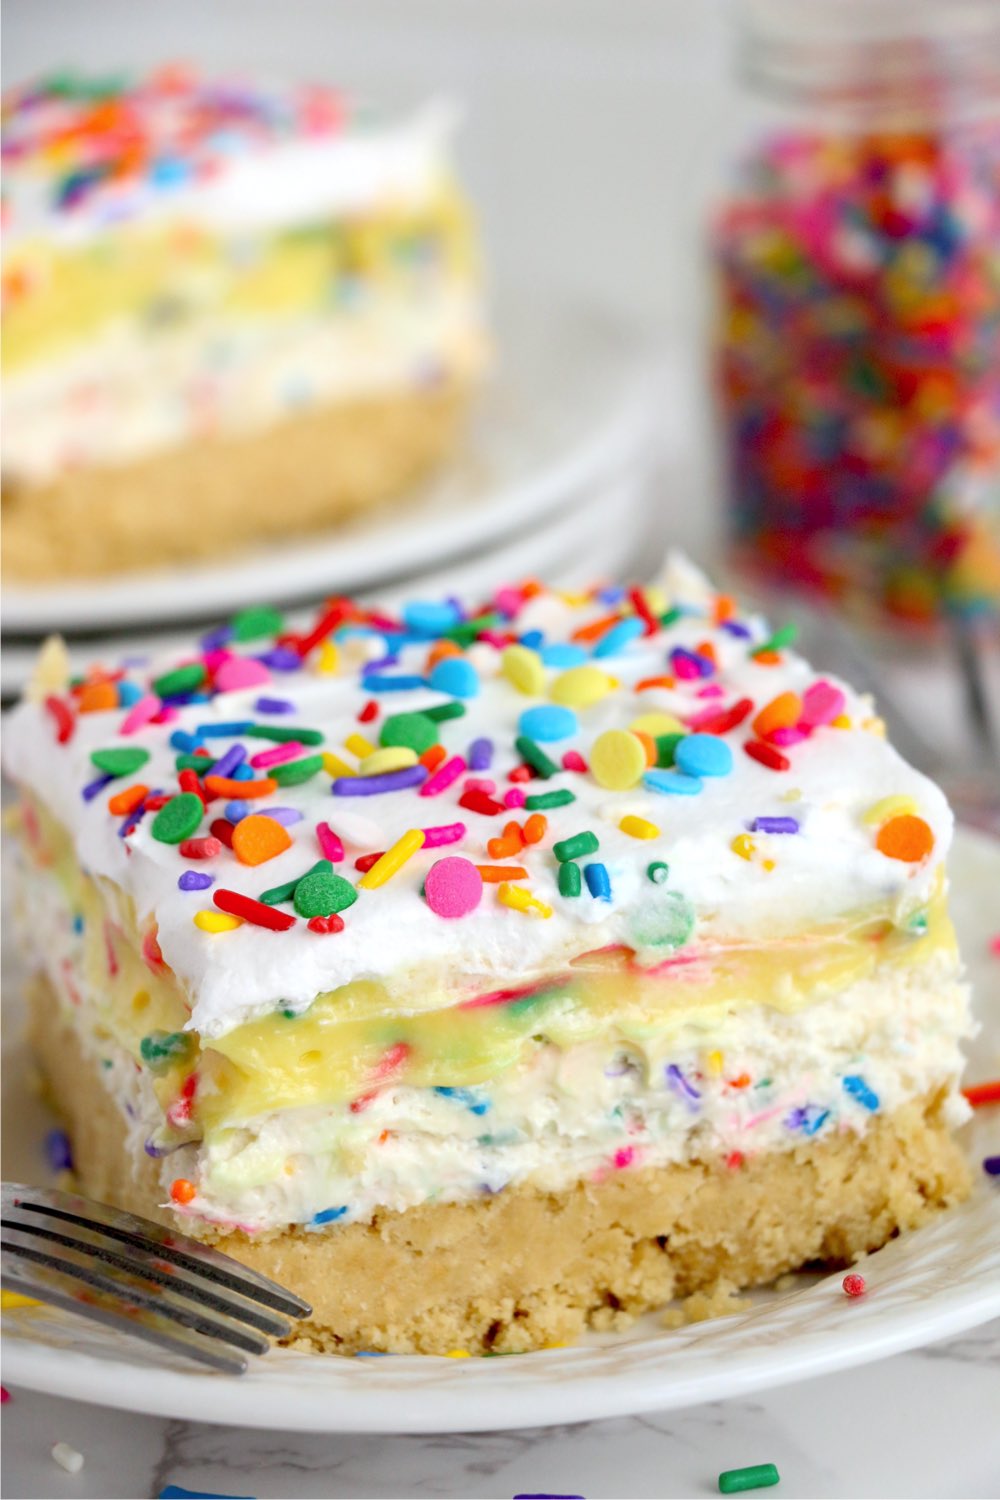 Piece of layered no-bake cake